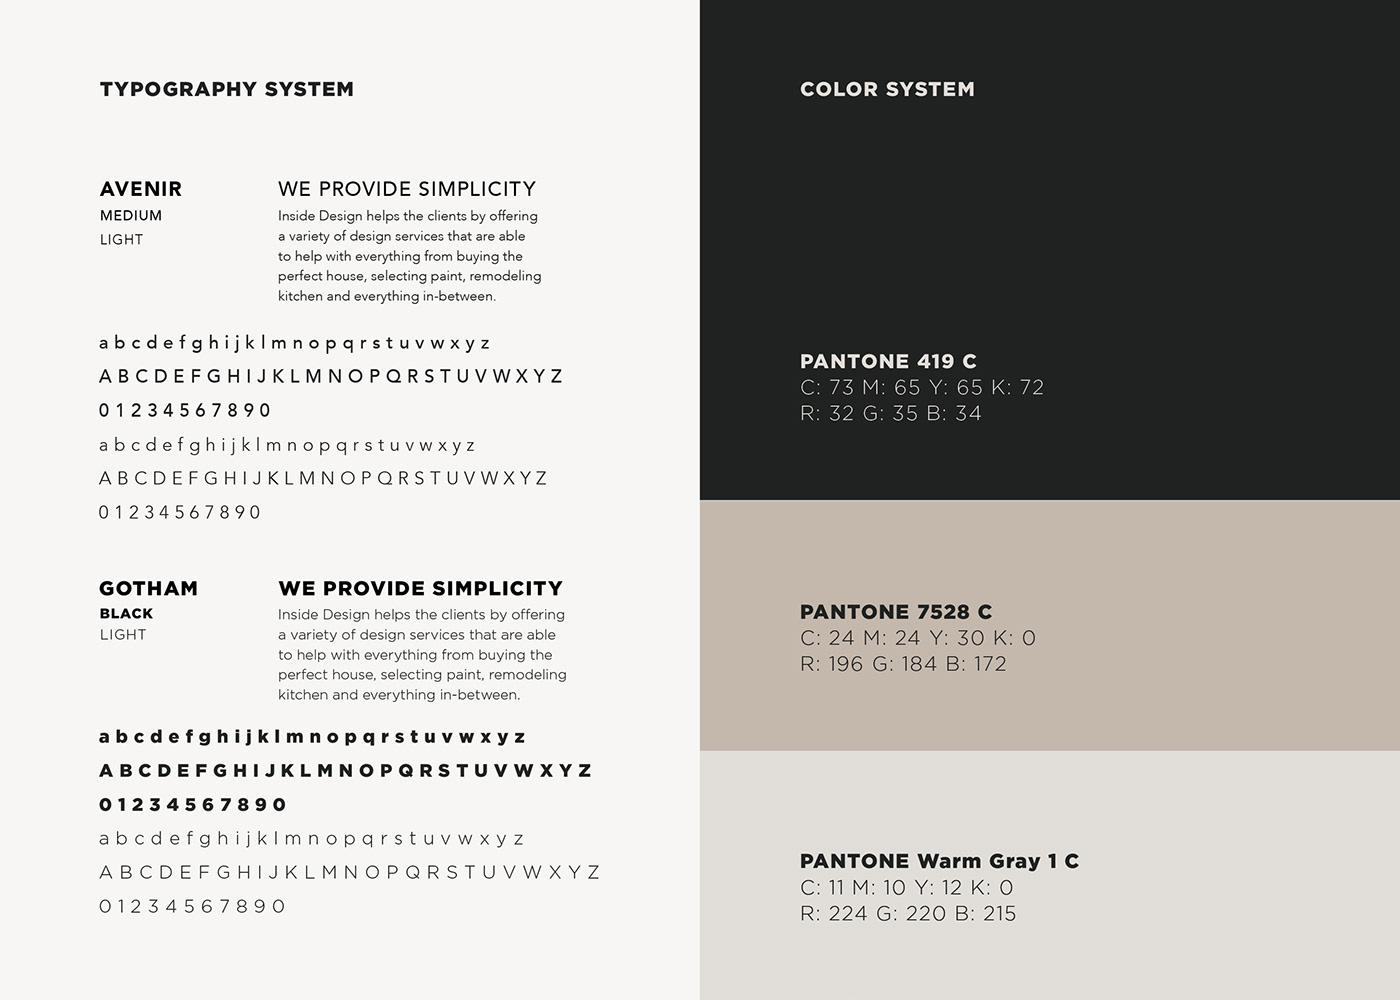 color system for insidedesign